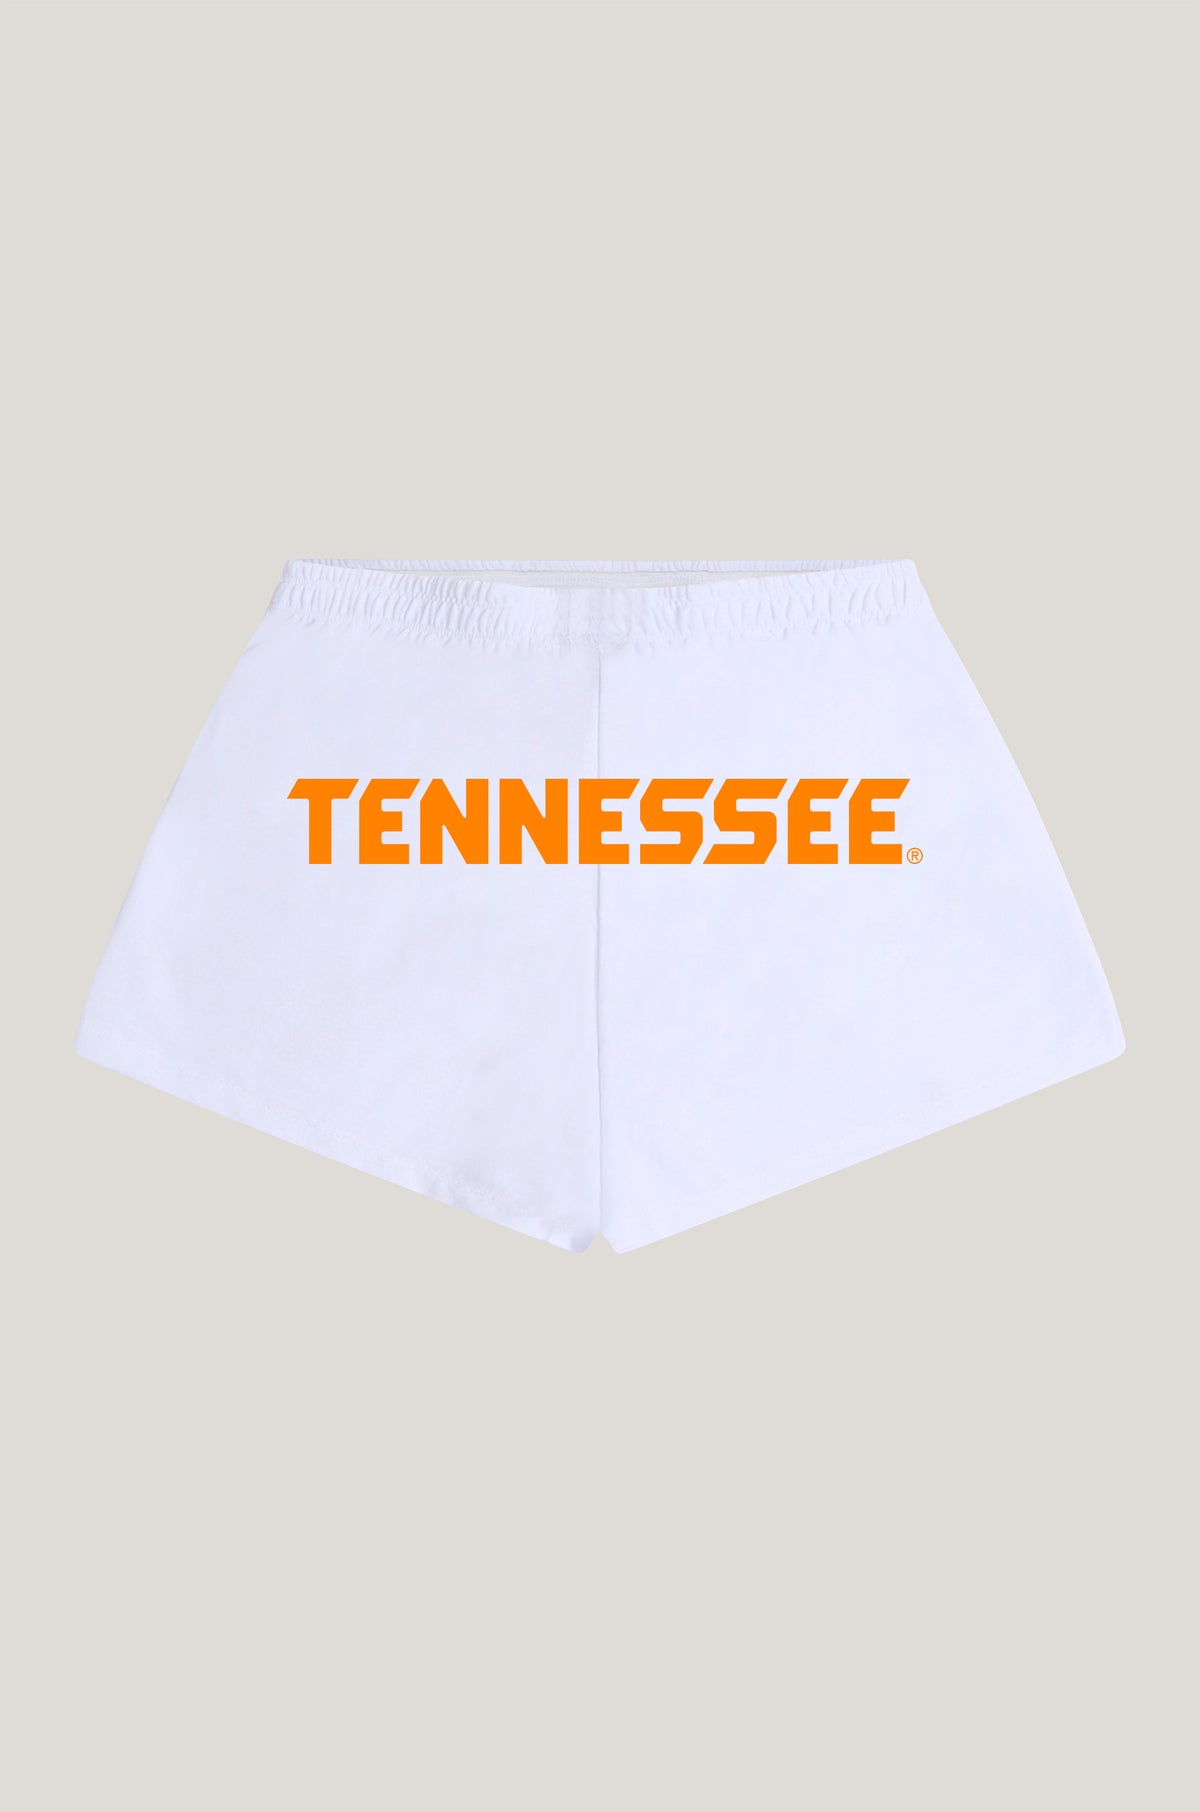 Tennessee P.E. Shorts